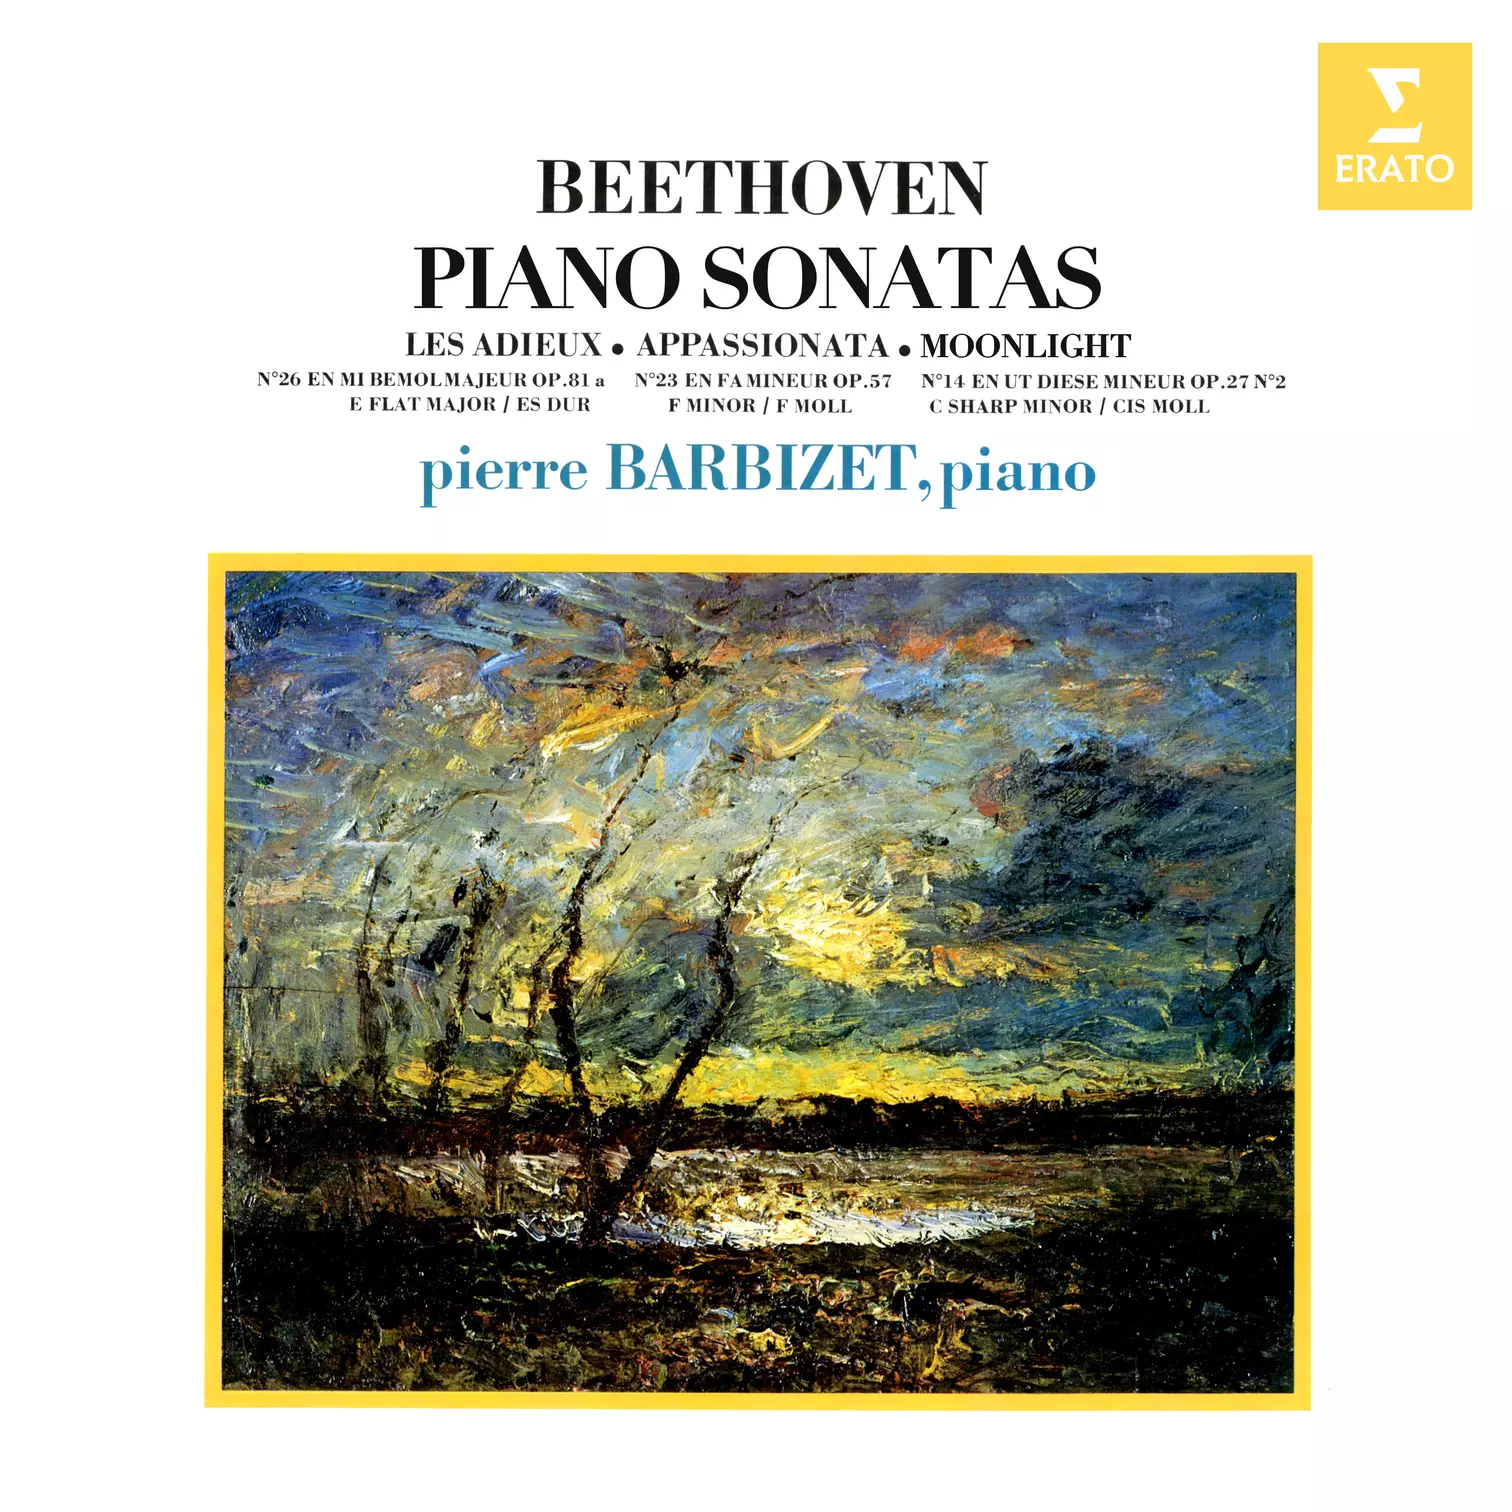 Beethoven: Piano Sonatas Nos. 14 “Moonlight”, 23 “Appassionata” & 26 “Les Adieux”